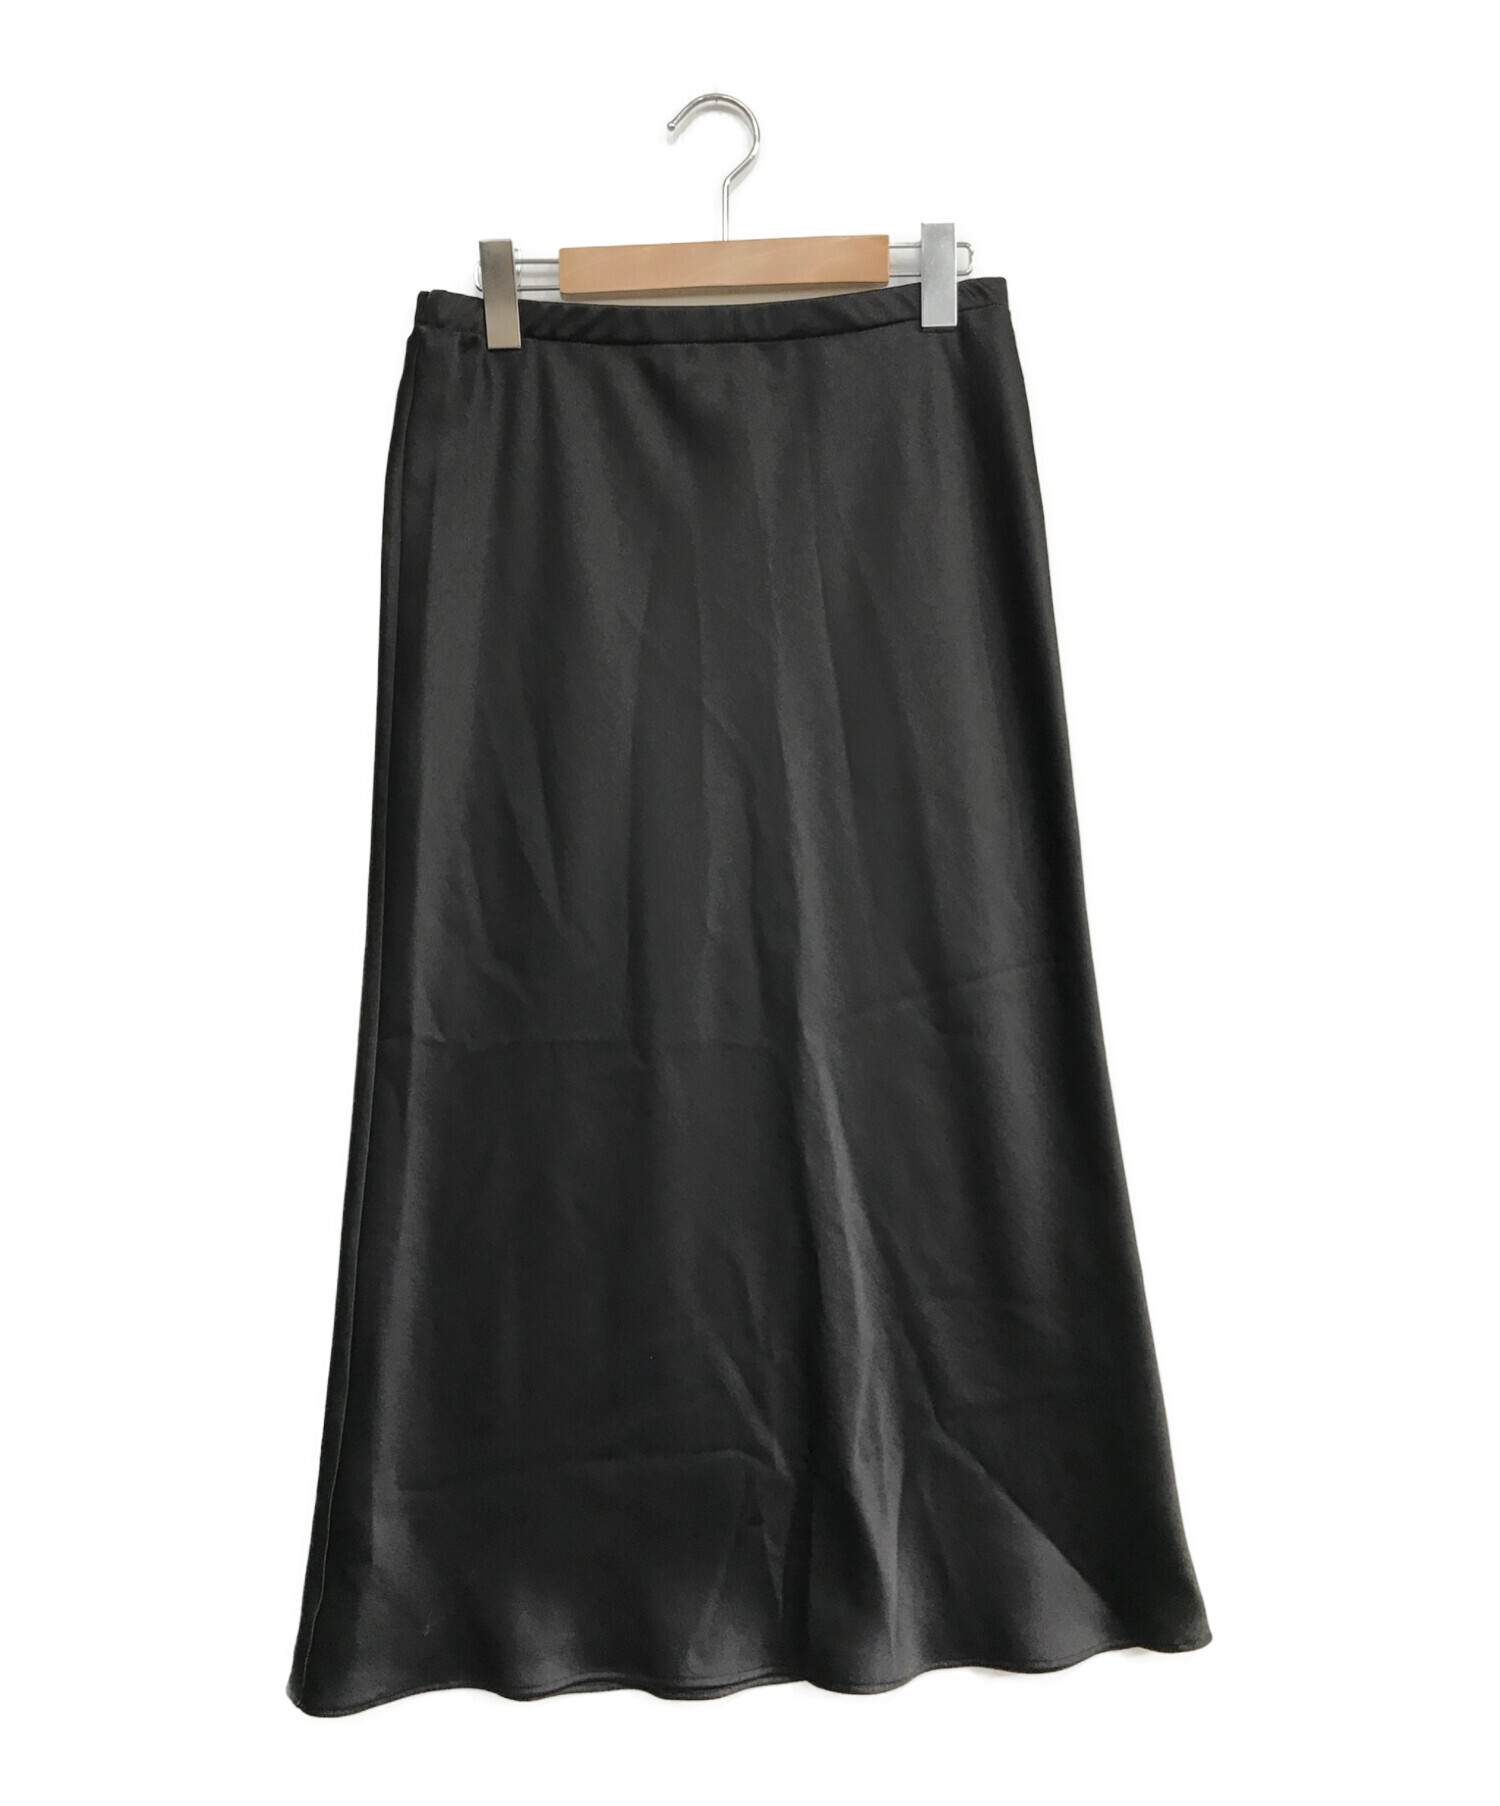 deuxiemeclasse Vintage Satin スカート